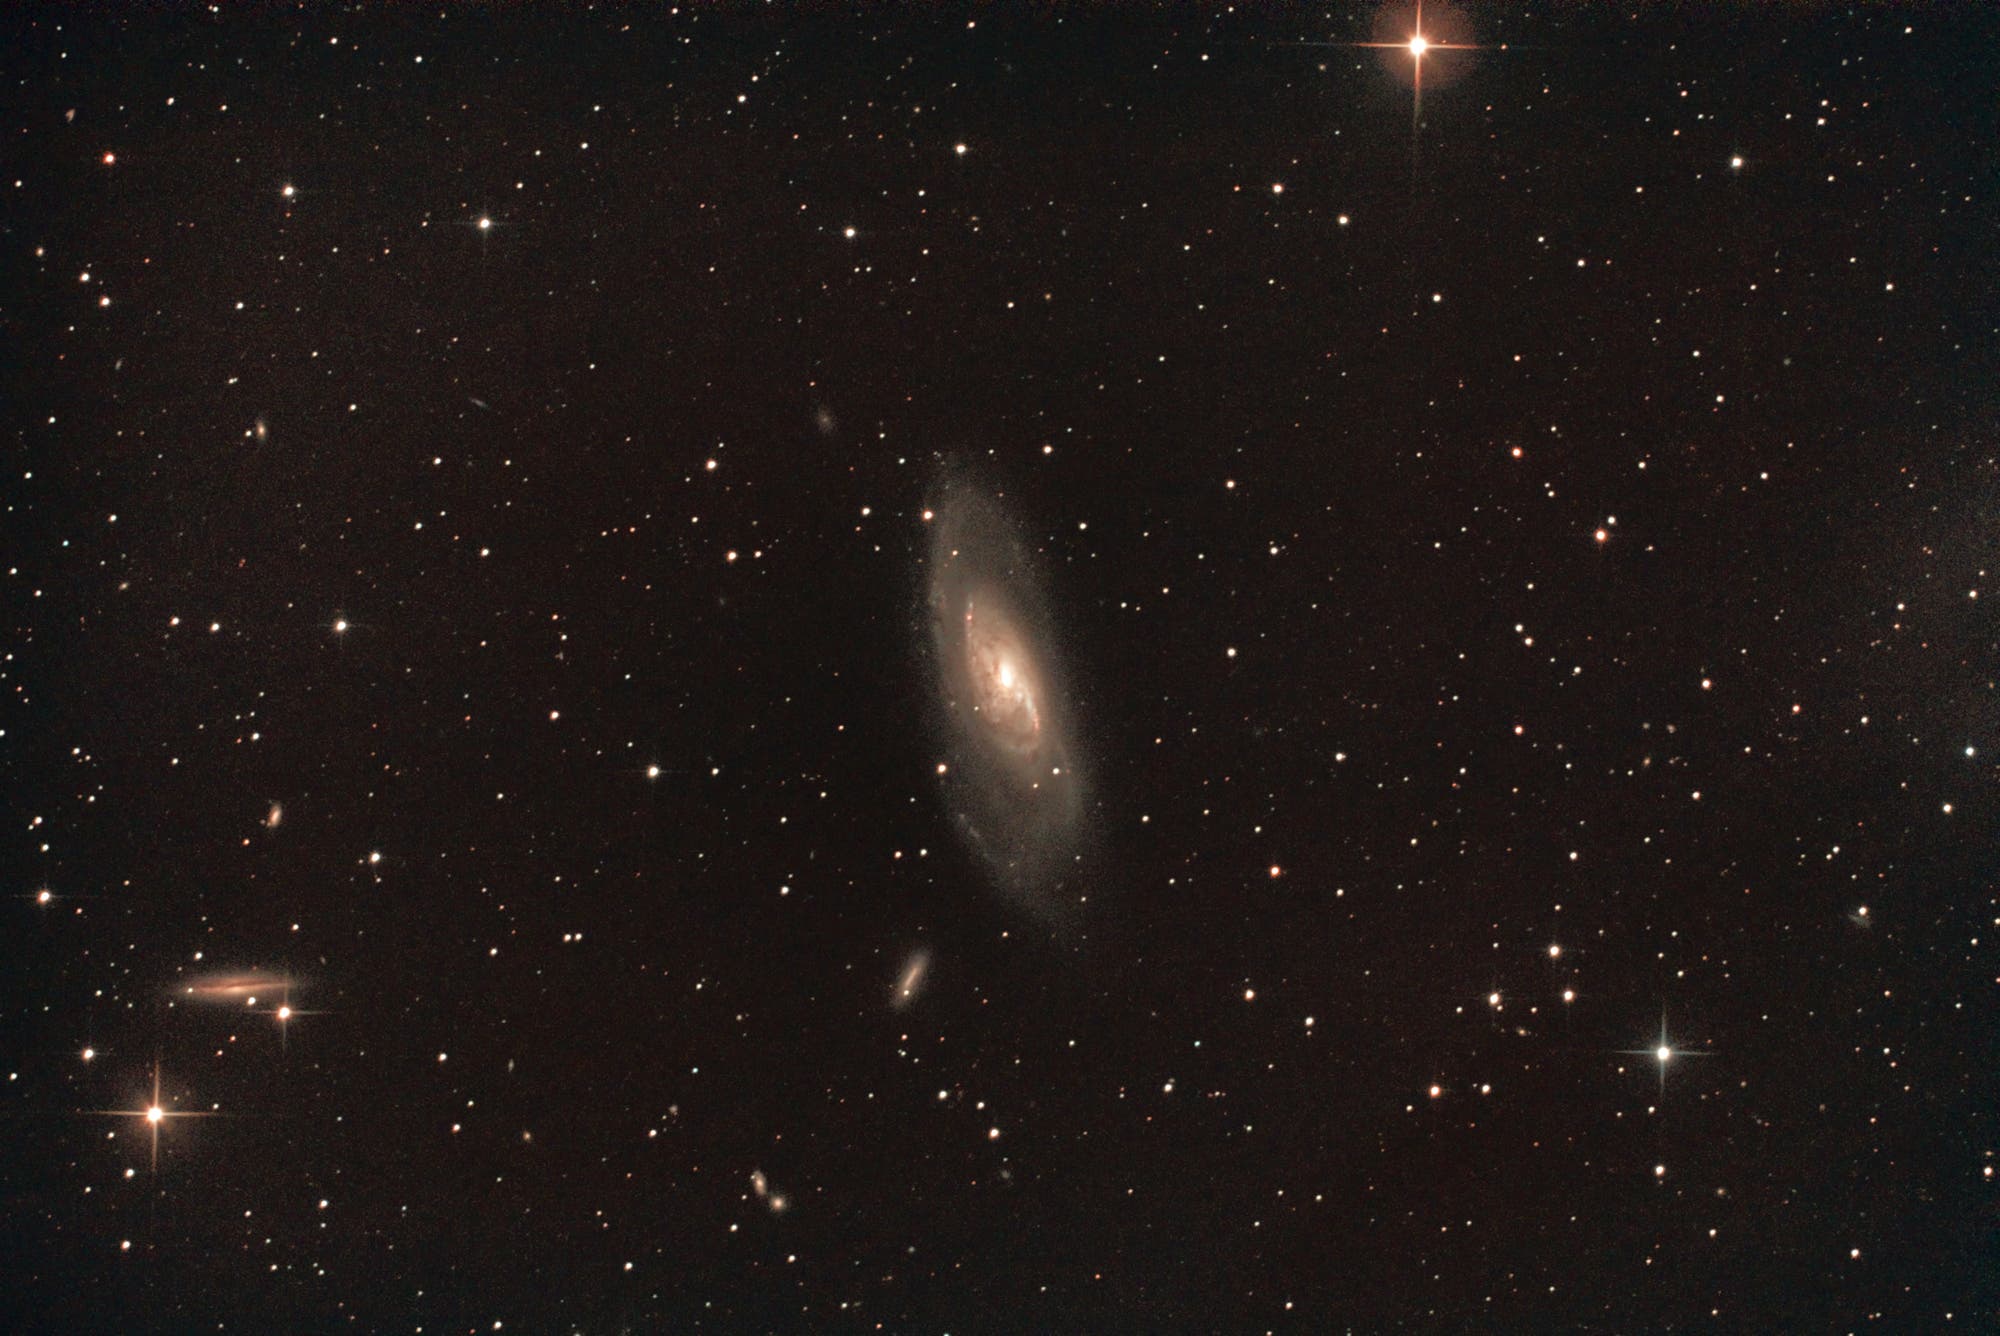 Galaxie Messier 106 im Sternbild Jagdhunde (Canes Venatici)